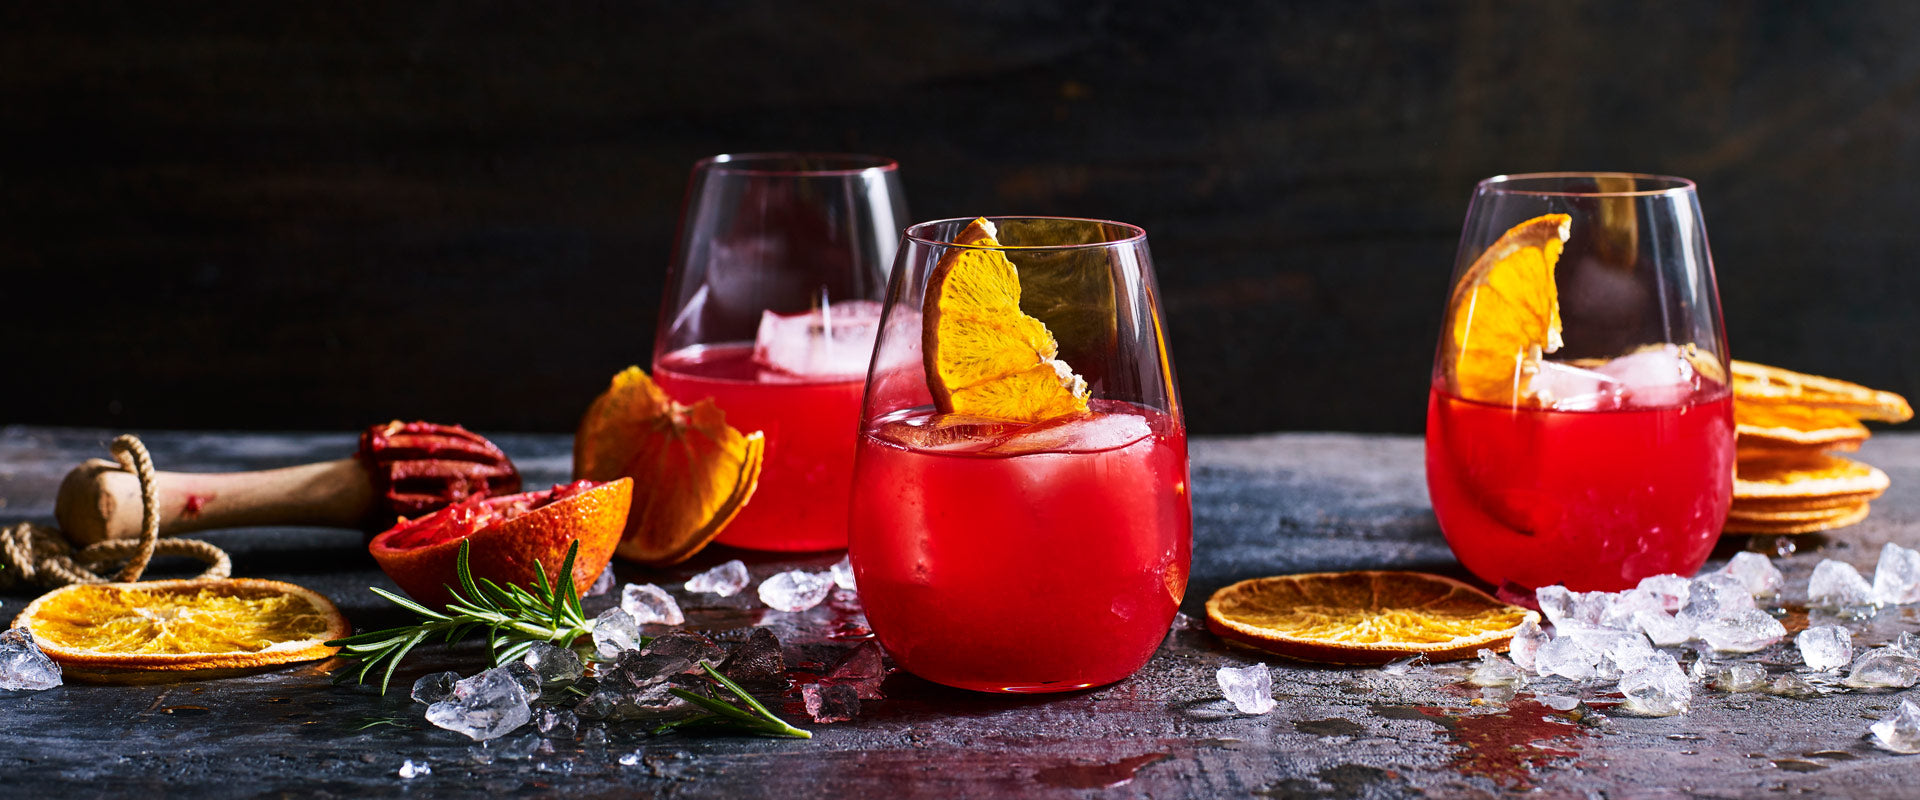 blood orange & rosemary cocktail